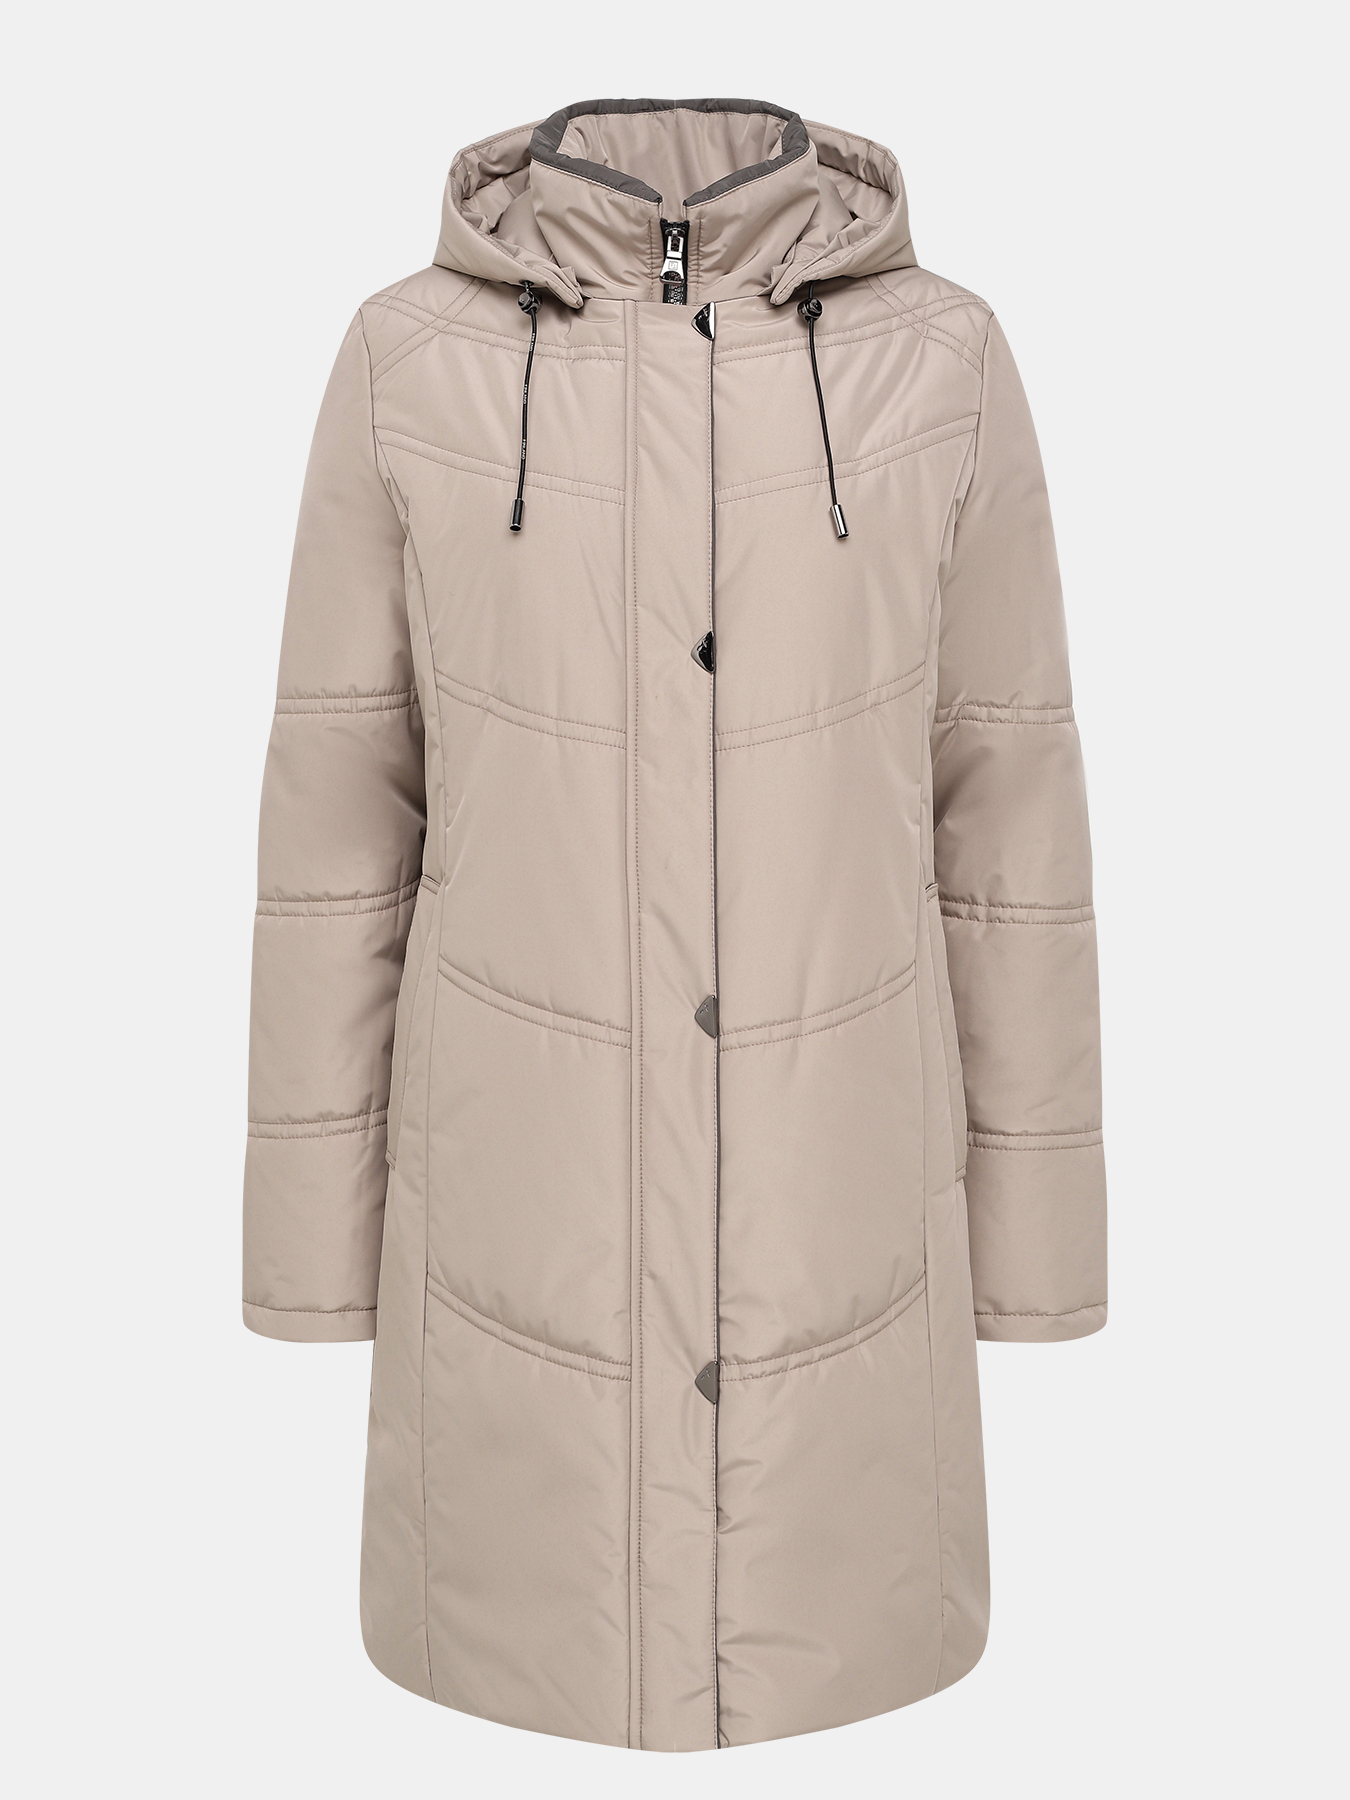 Пальто зимнее Maritta 433523-026, цвет бежевый, размер 50 - фото 1